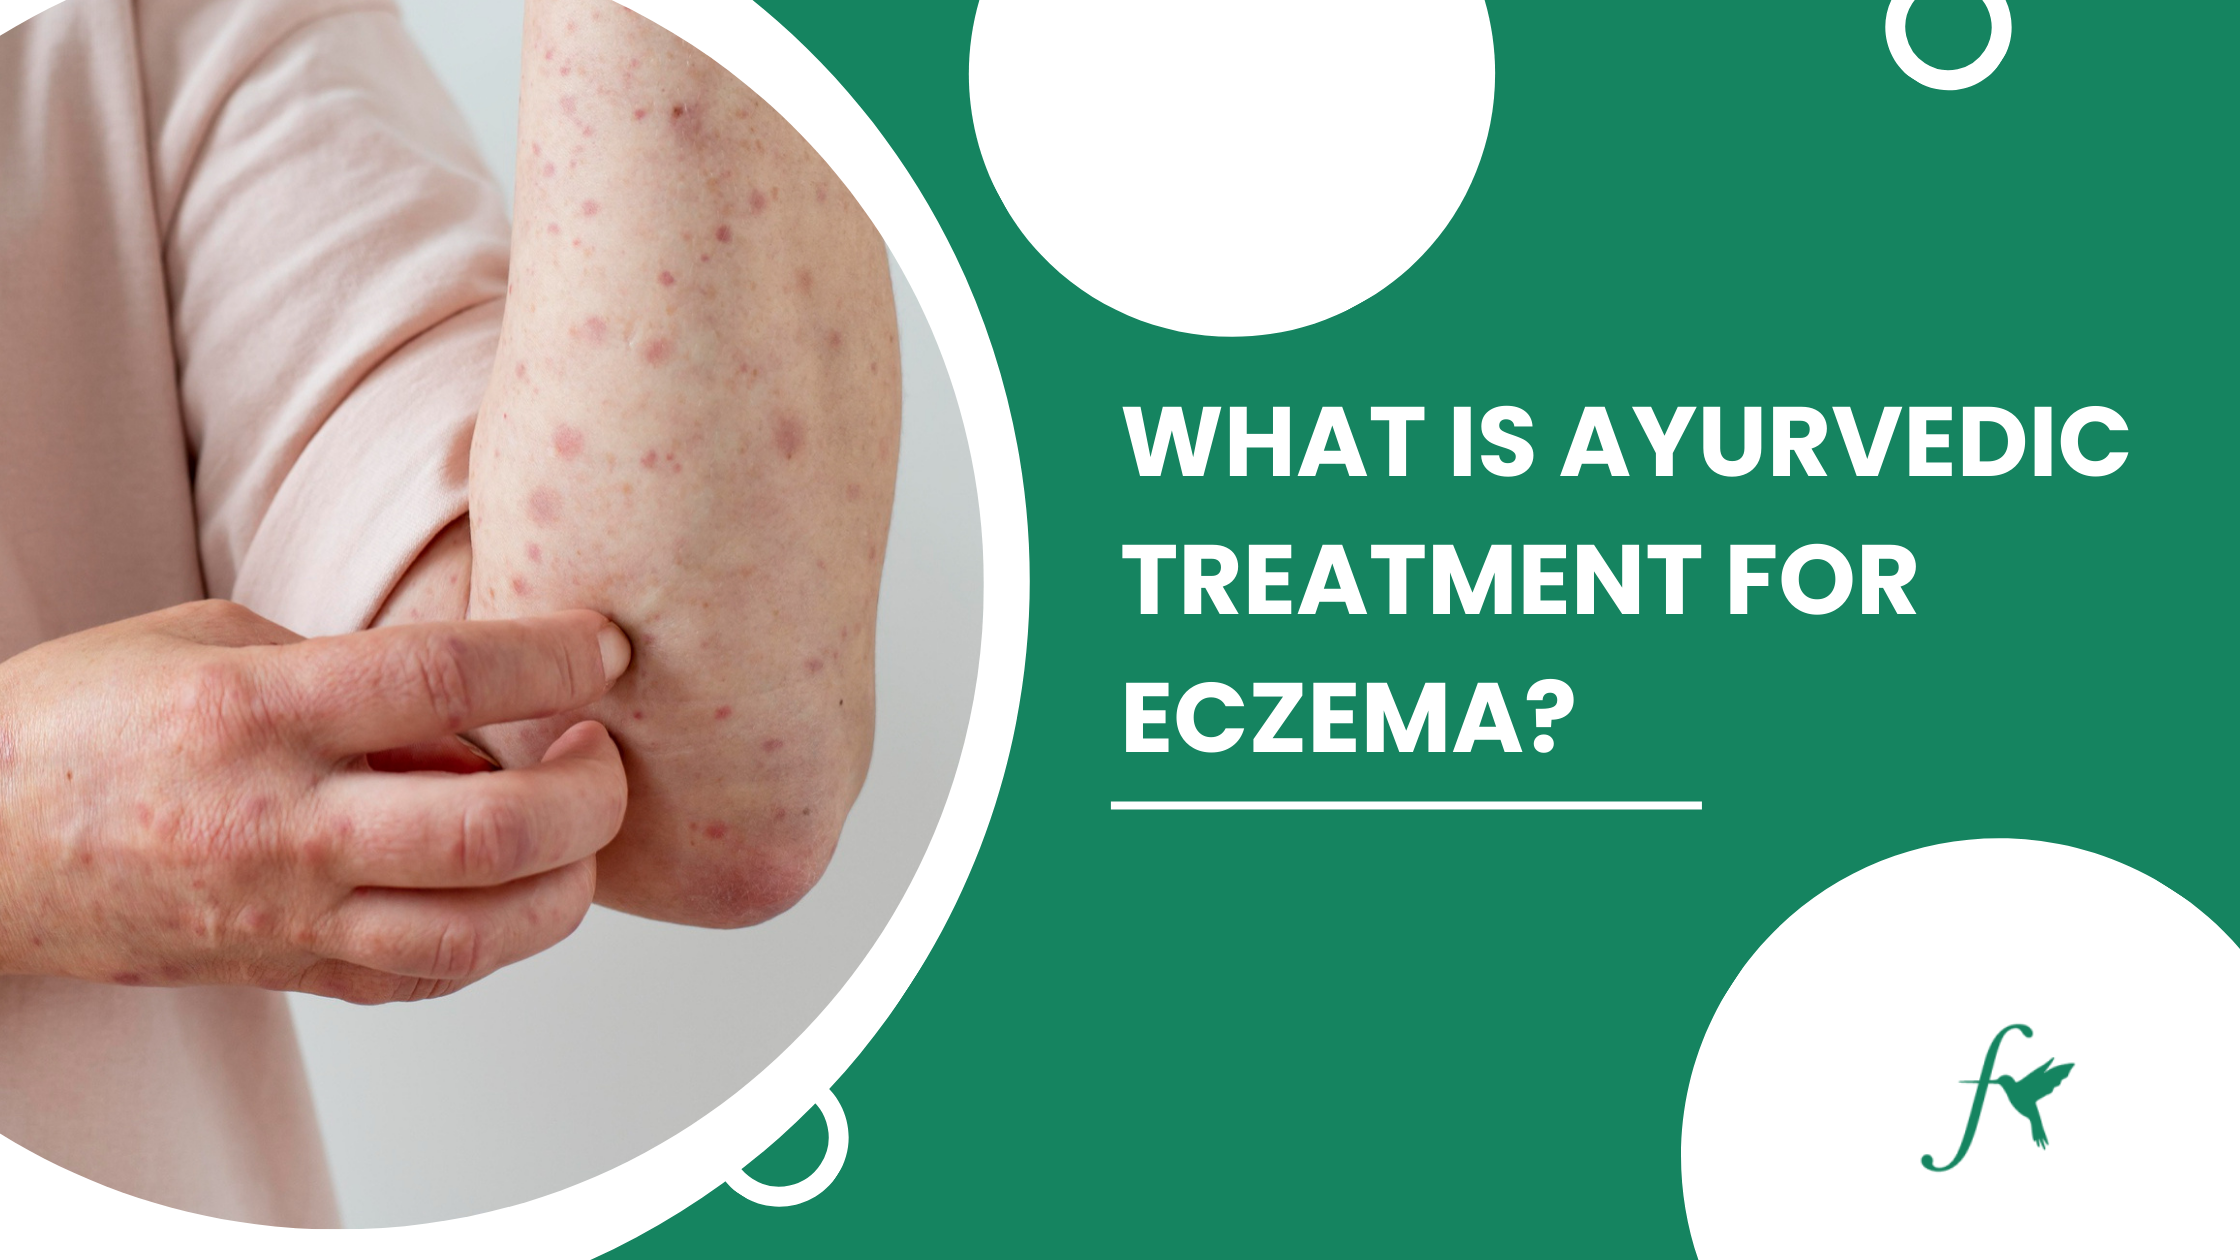 Ayurvedic Treatment For Eczema